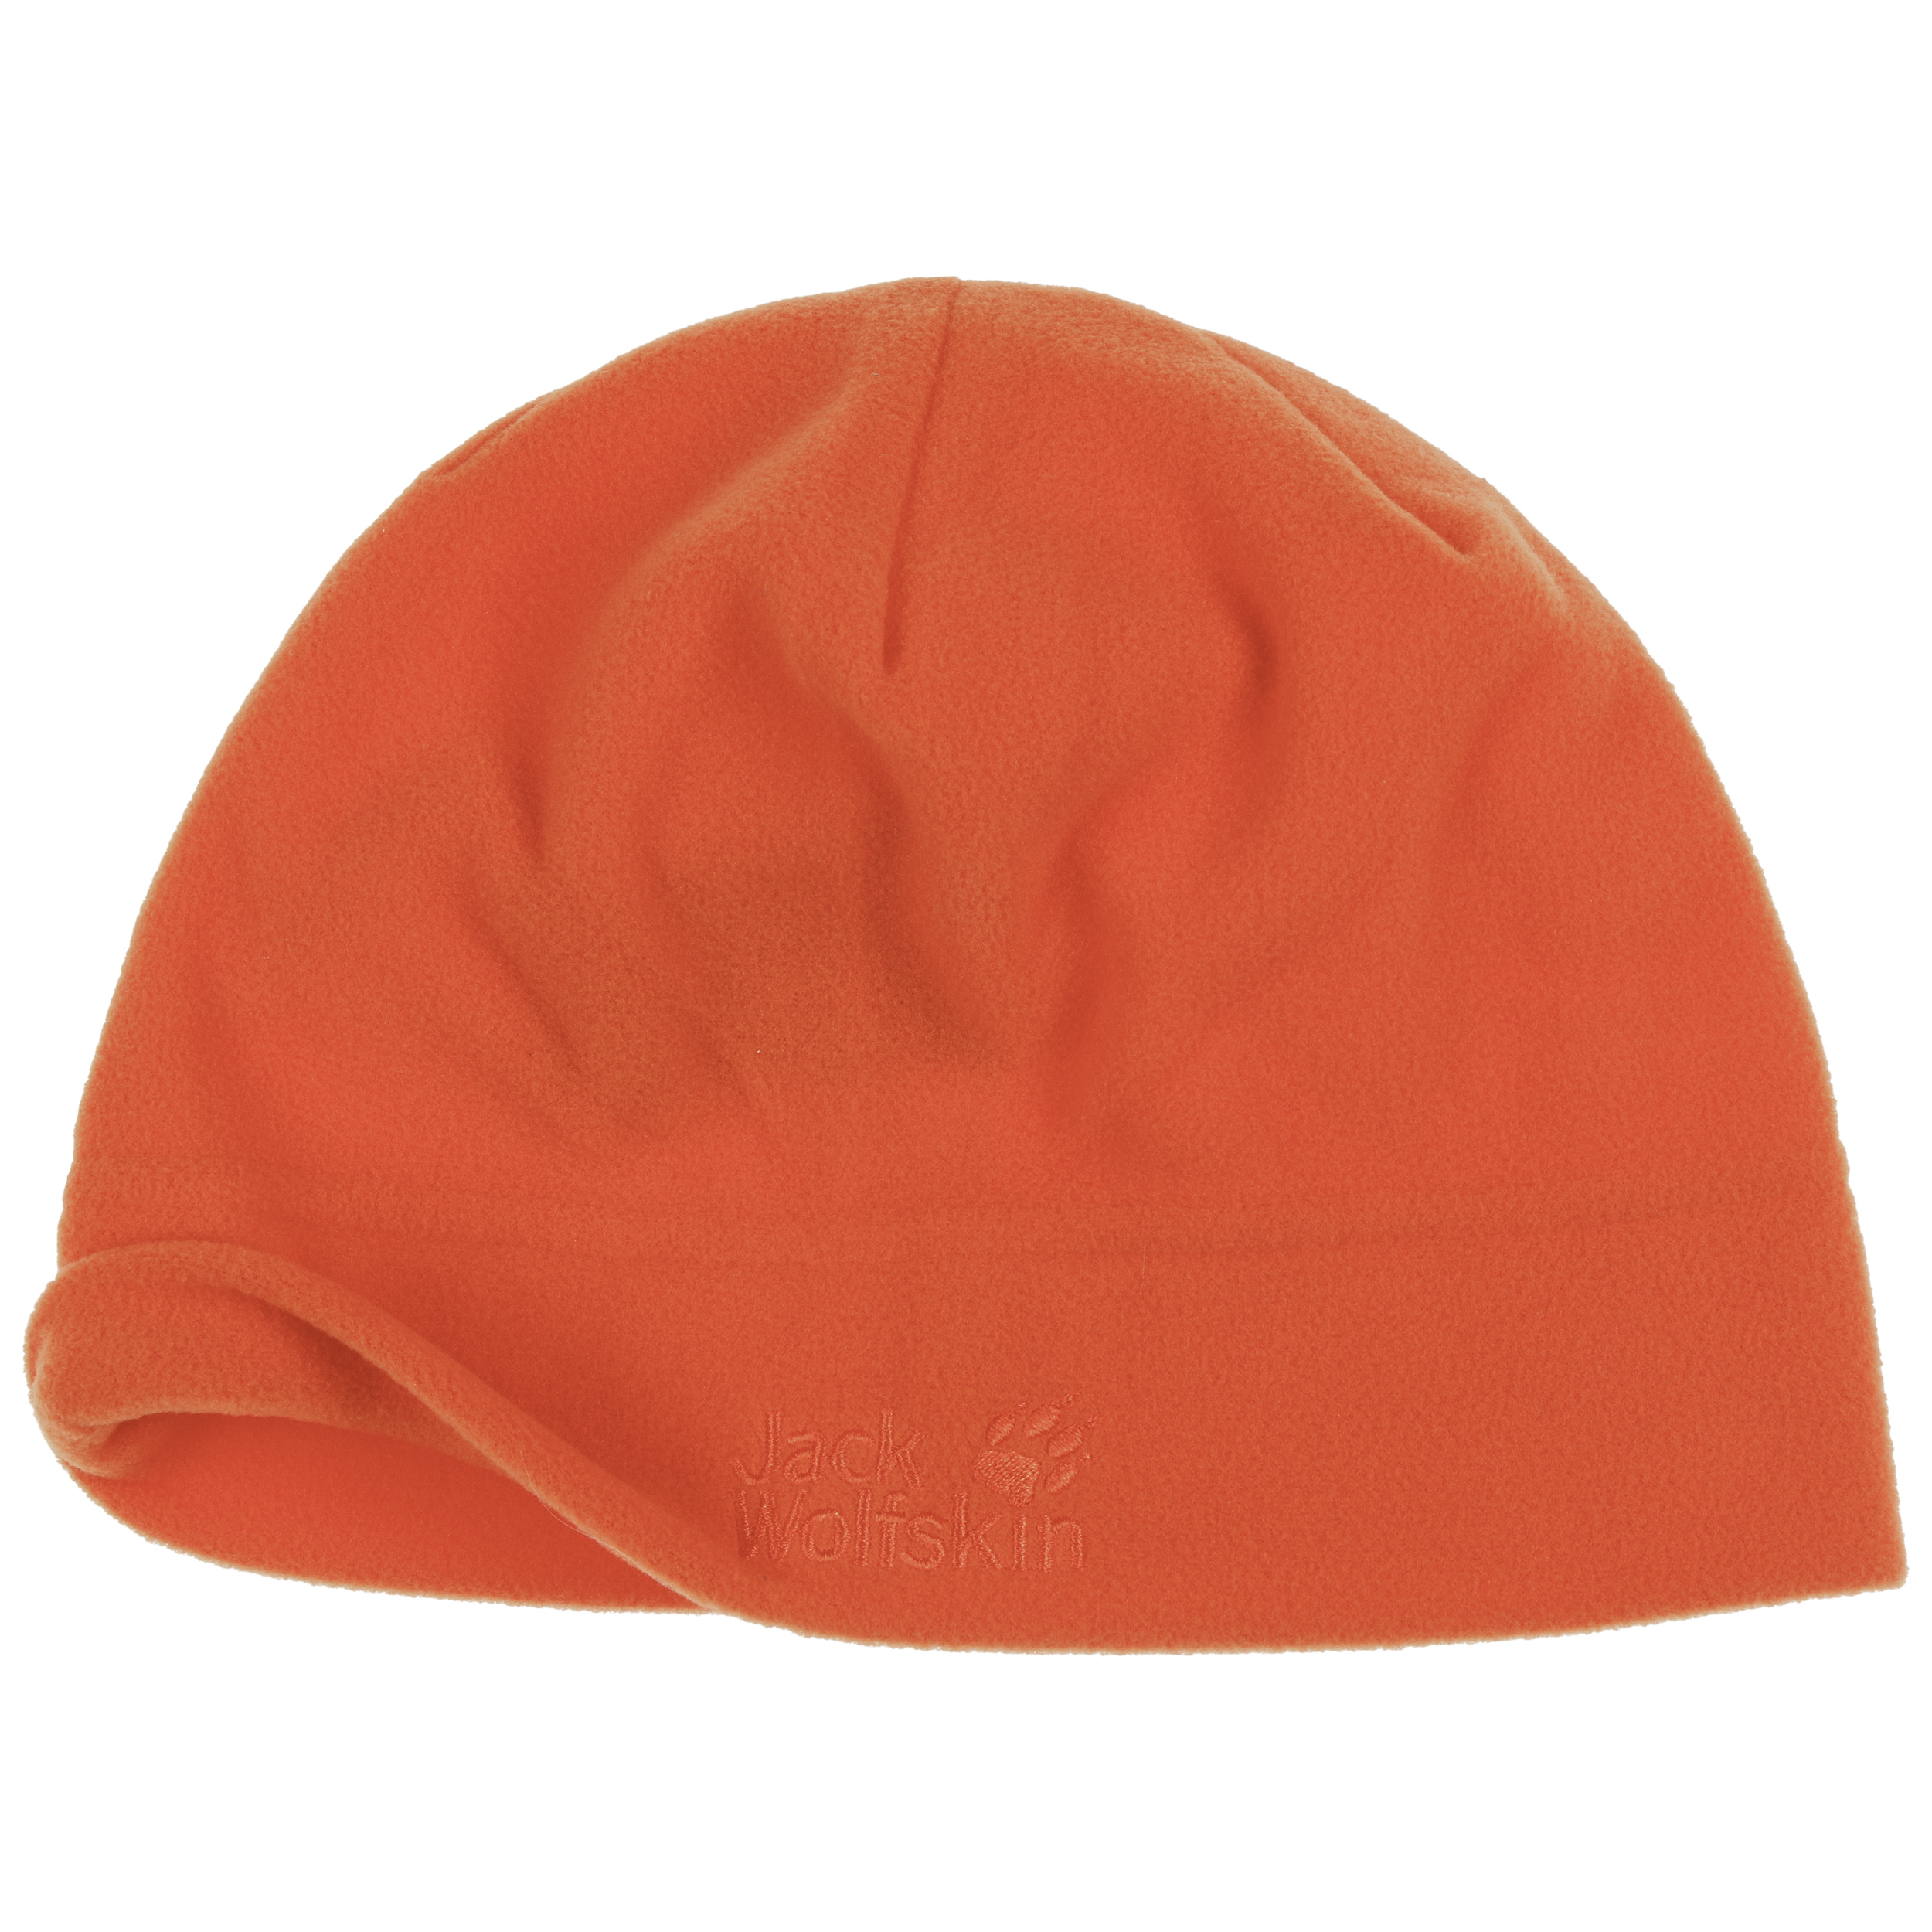 Real Stuff Wolfskin Hat by Jack € Beanie - 21,95